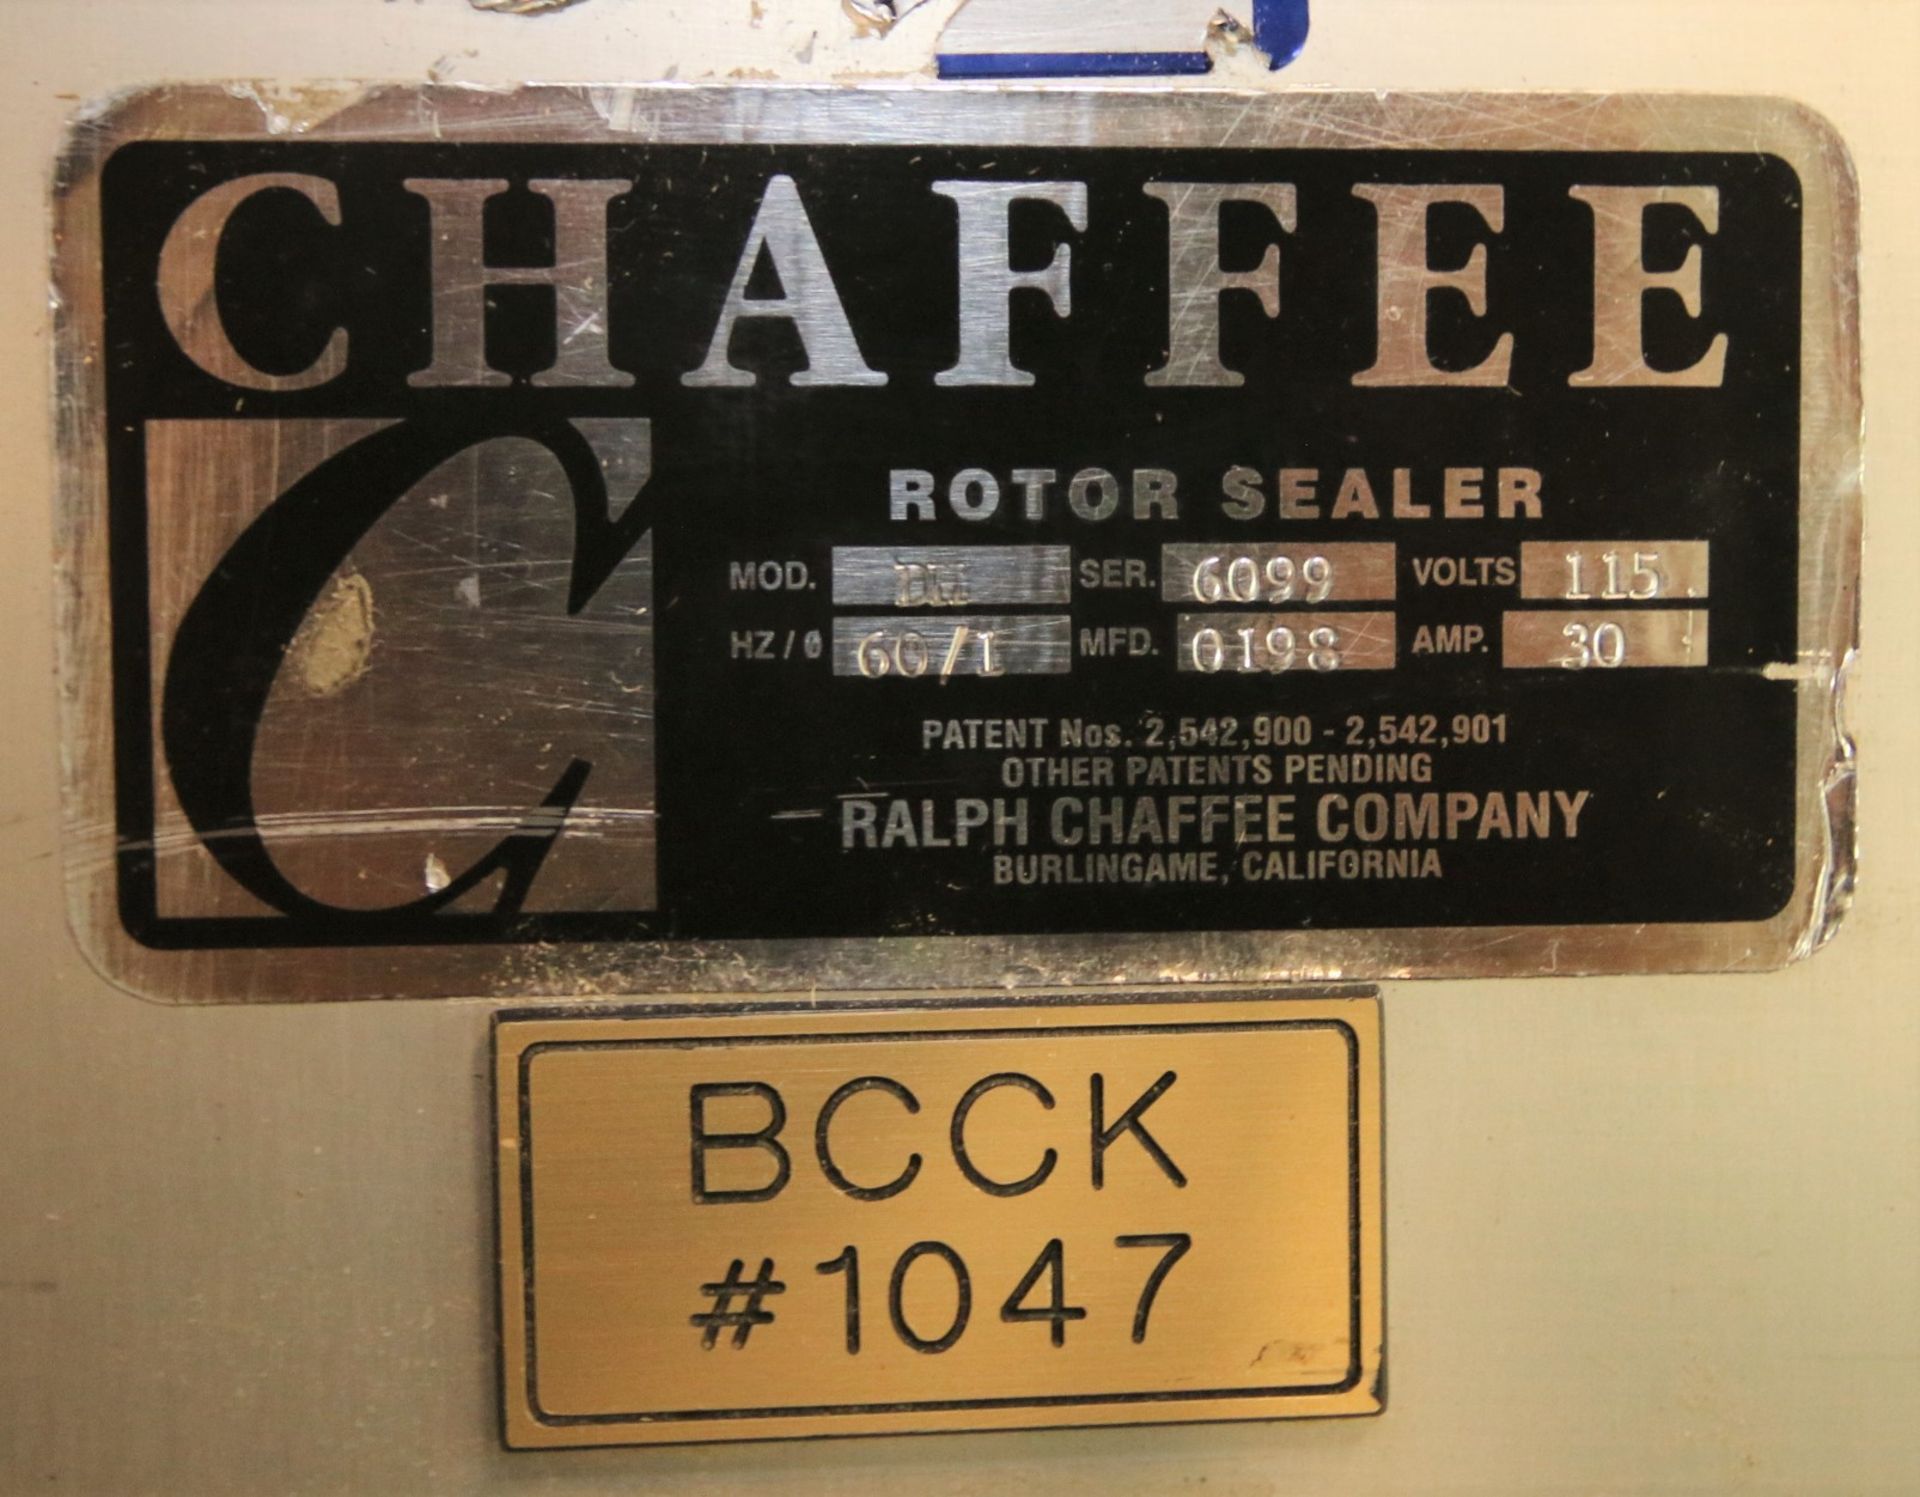 Caffee 26" Horizontal Adjustable Bag Sealer, Model DH, S/N 6099, with 6'L x 2"W Belt Conveyor, - Image 5 of 5